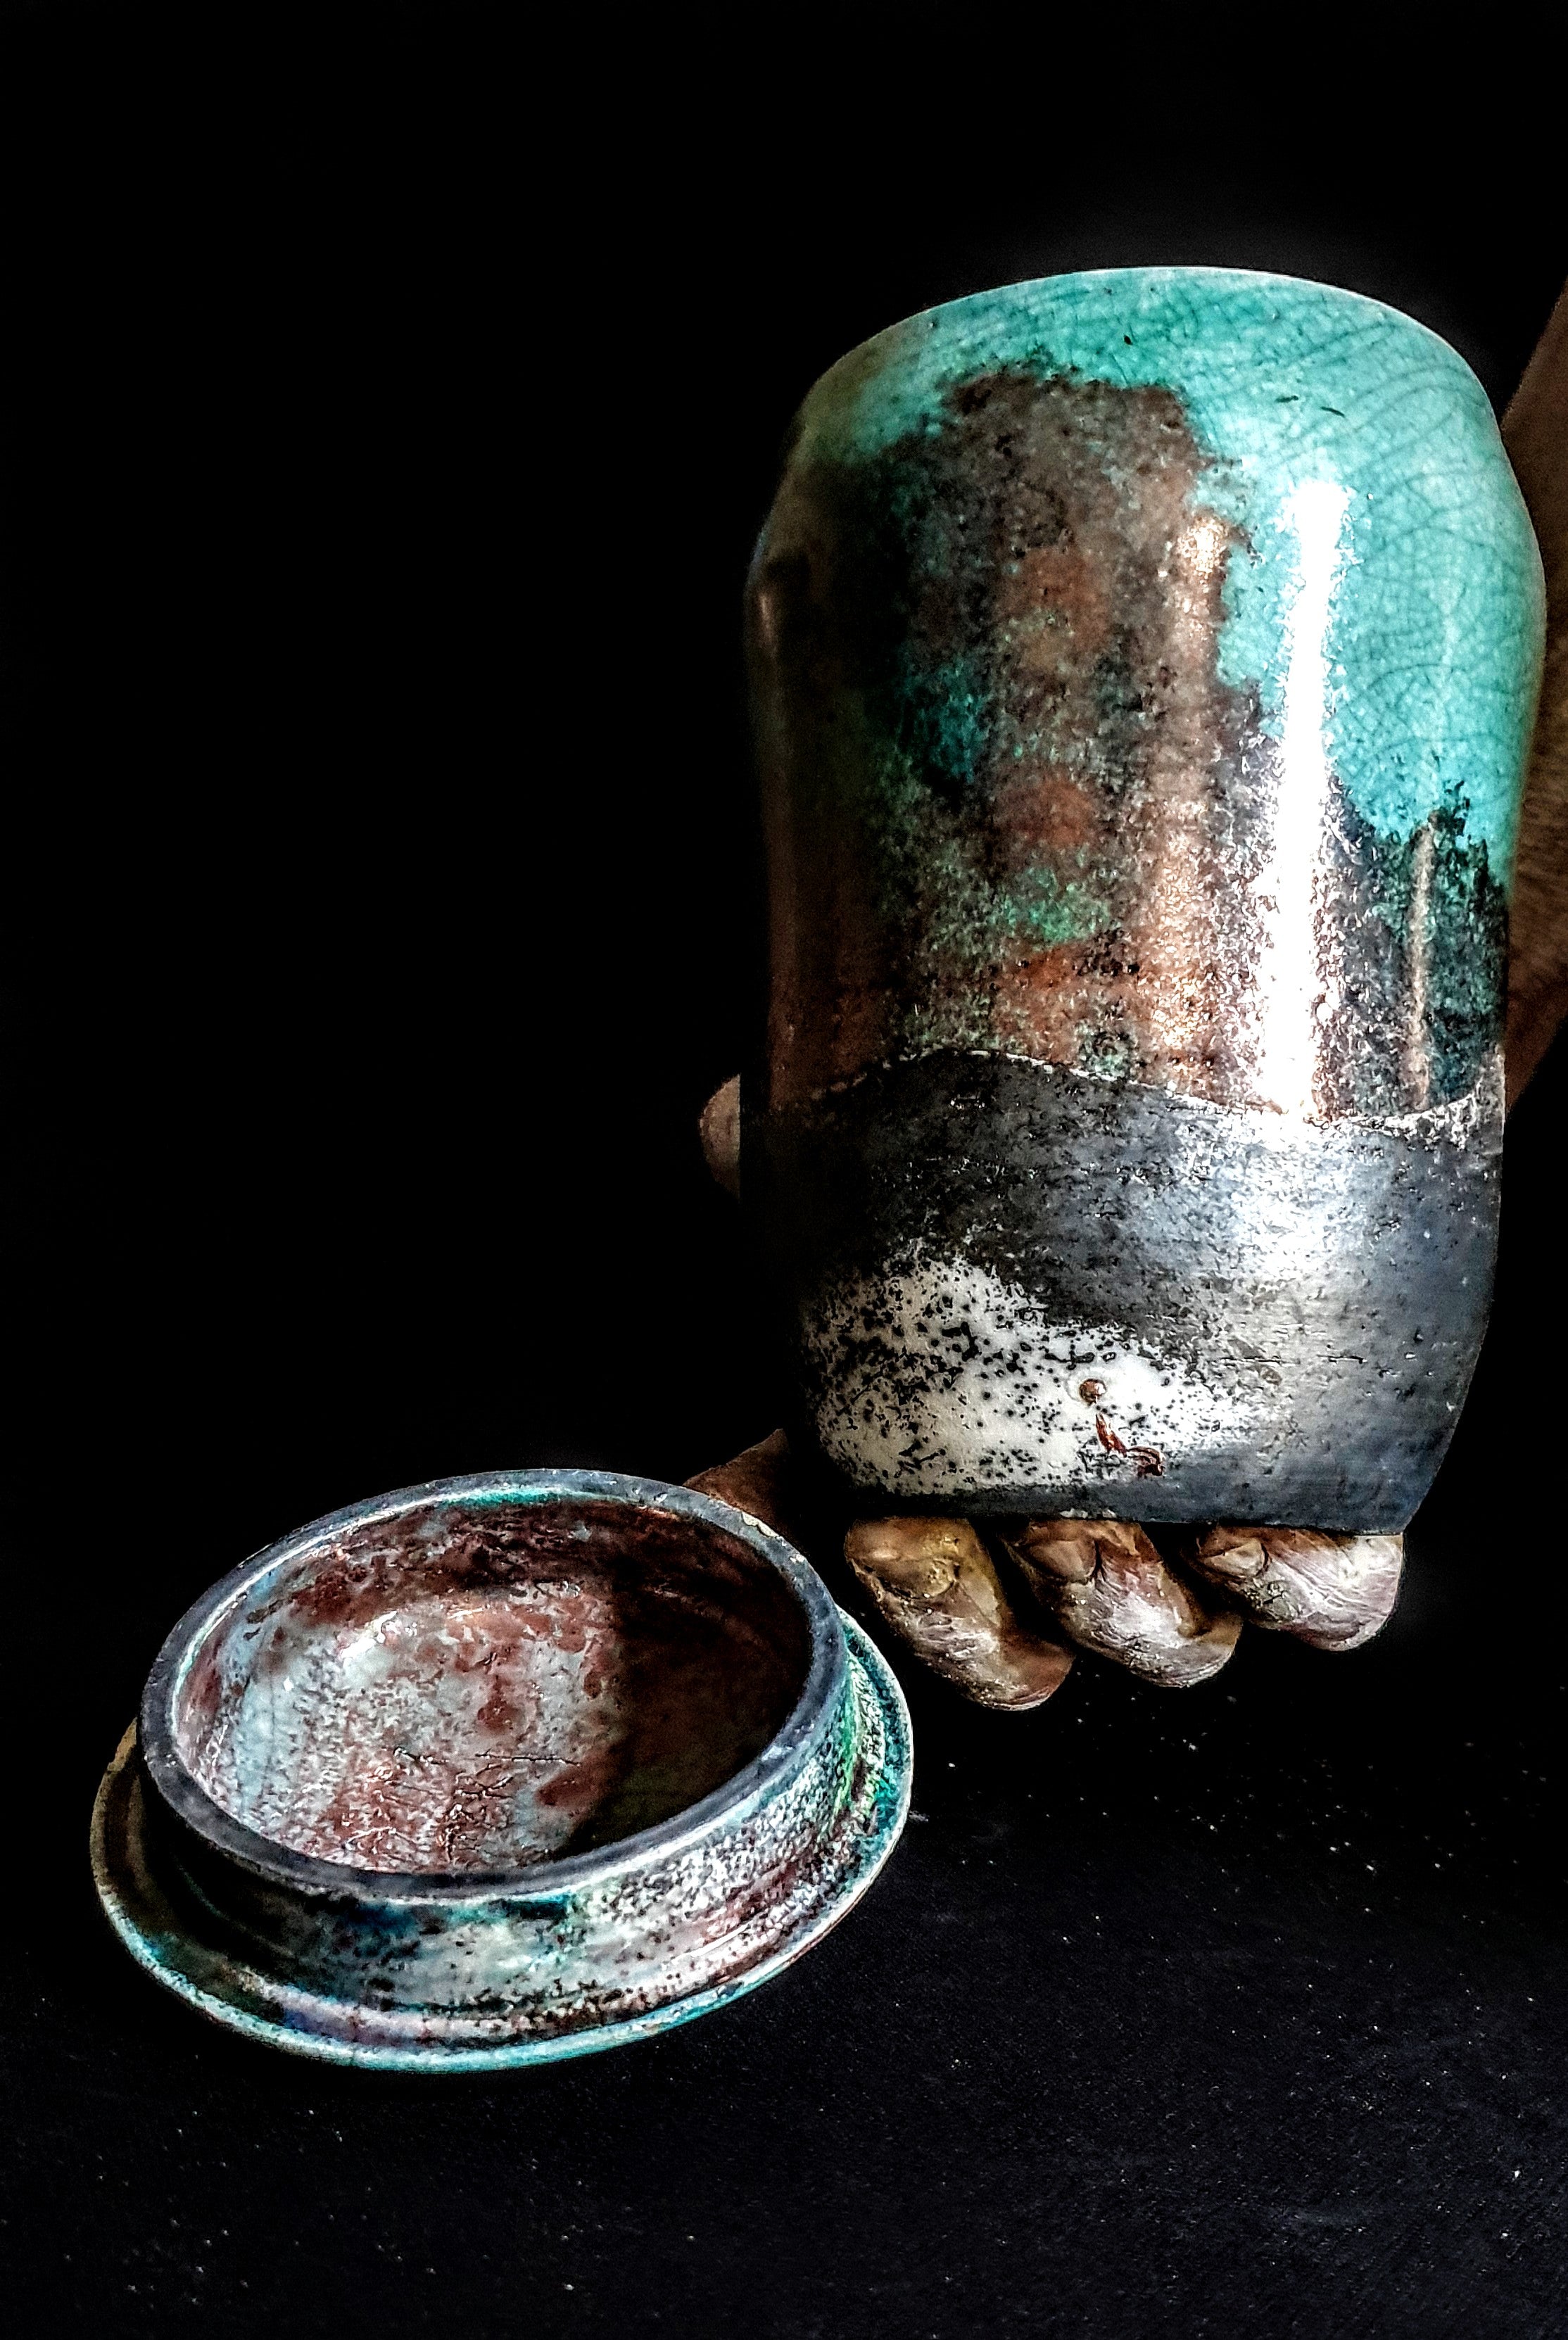 Ocean Shell Handmade Keepsake Urn for Pets | One-of-a-Kind  Modern Artistic Urn